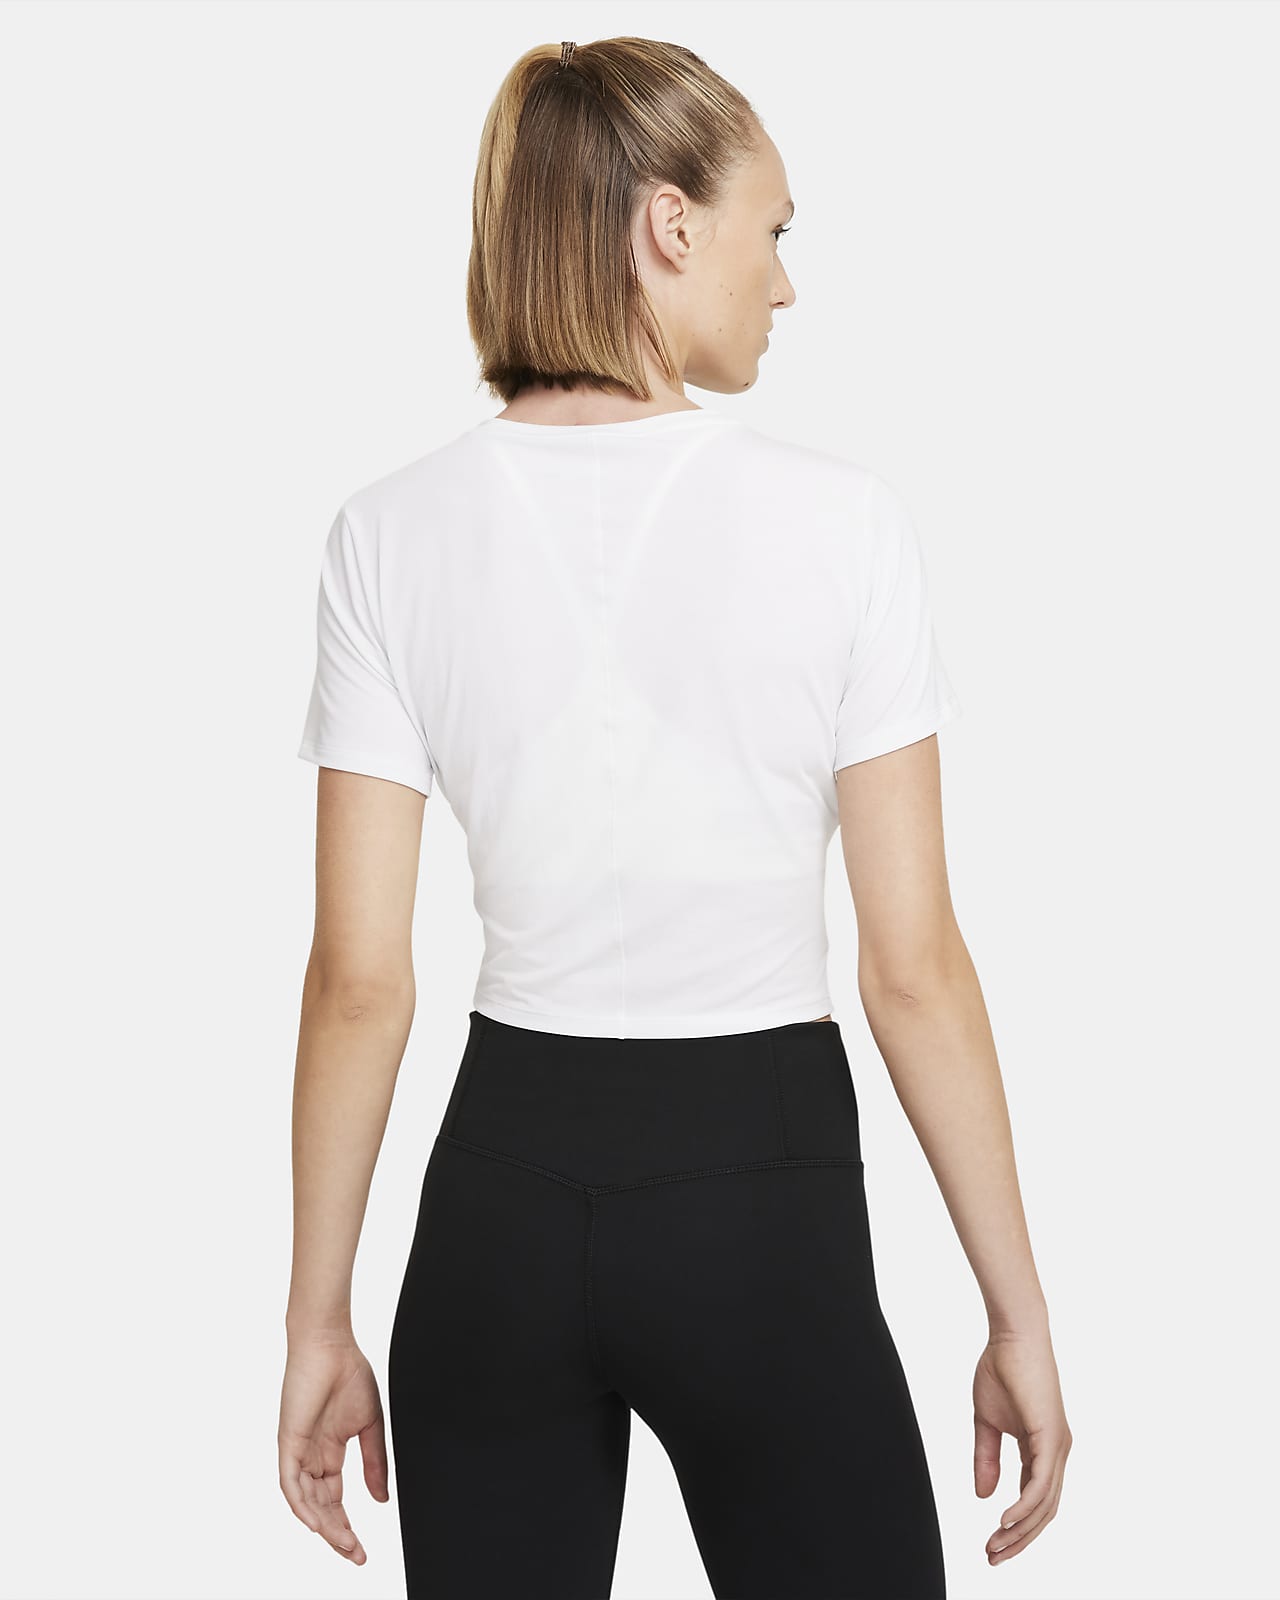 Nike Dri-FIT One Luxe Women's Twist Cropped Short-Sleeve Top.